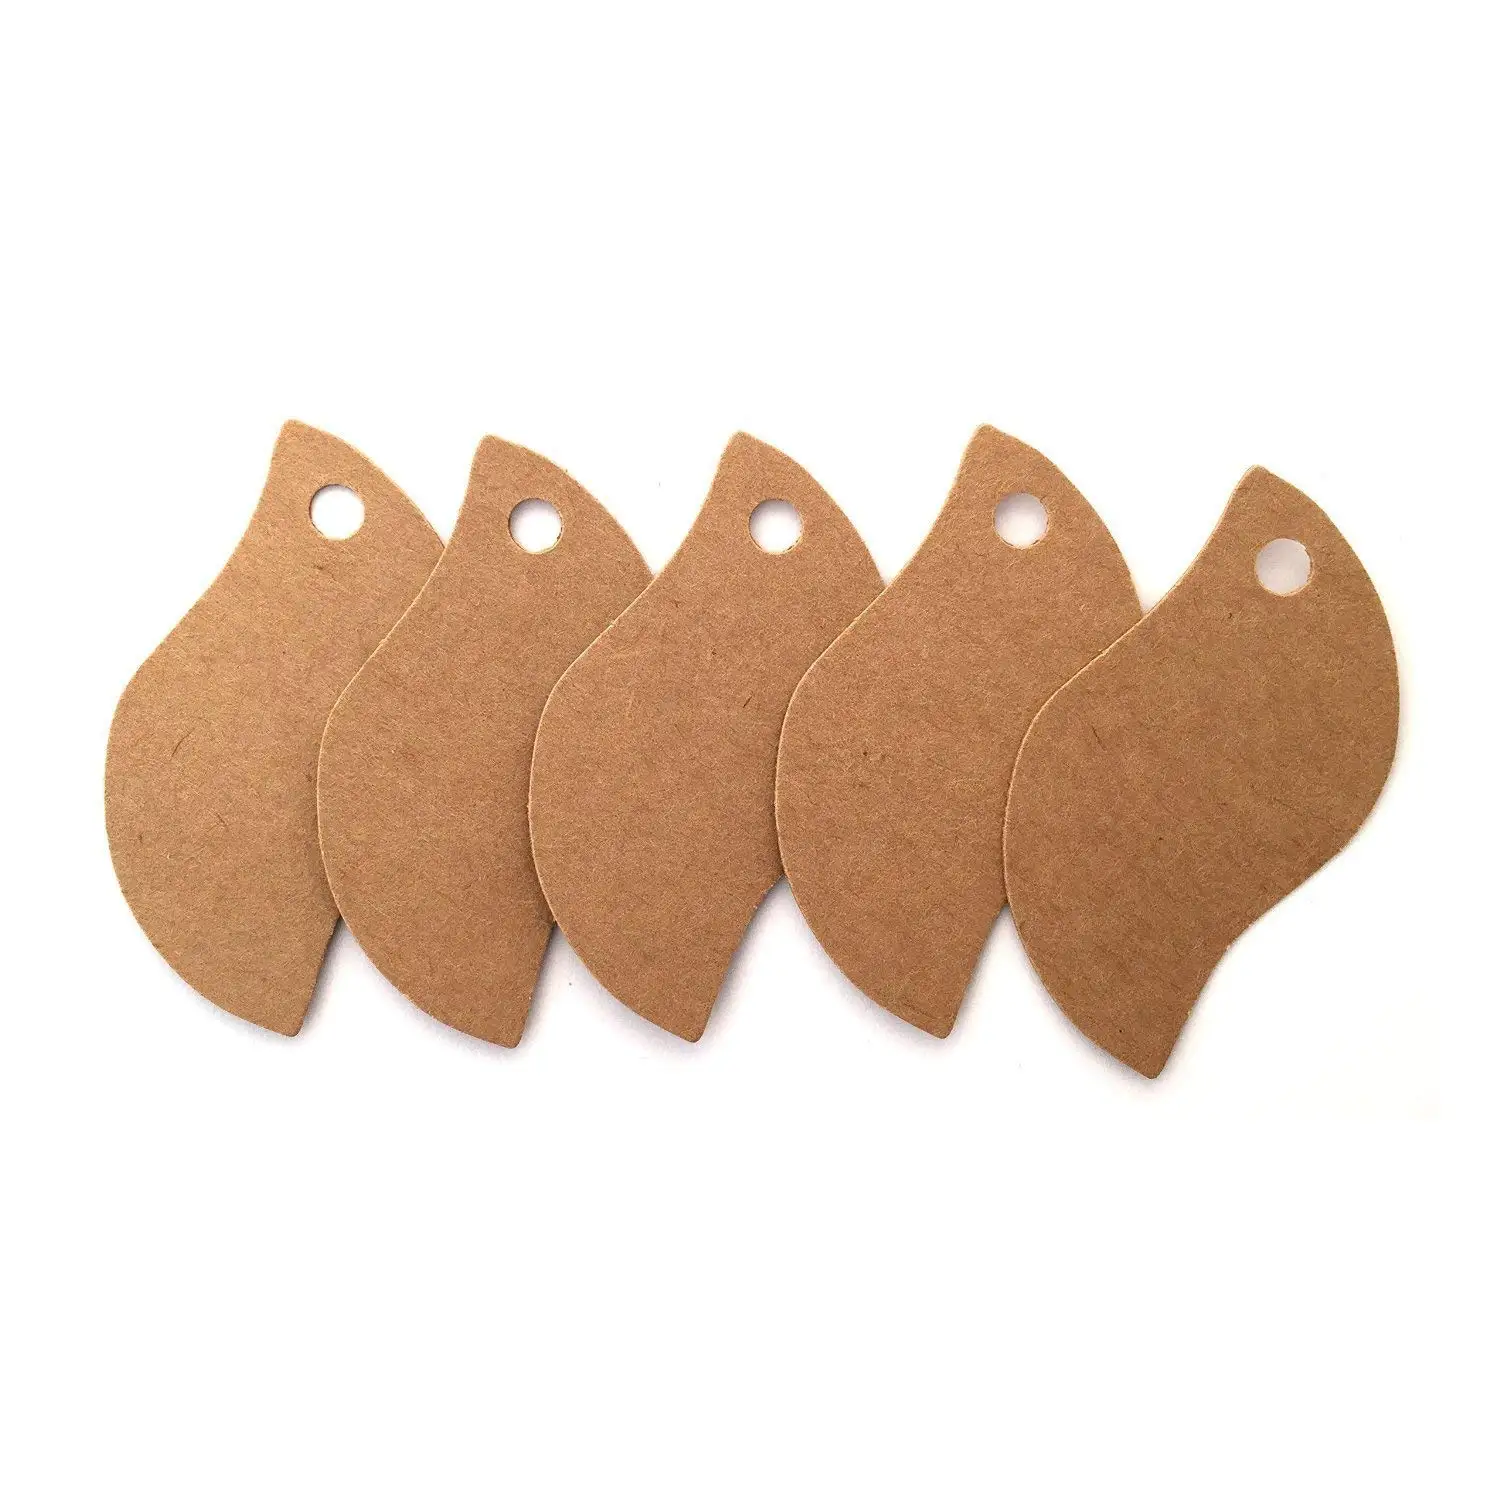 Buy MrLabel® LeafShaped MultiFunction Kraft Paper Tags